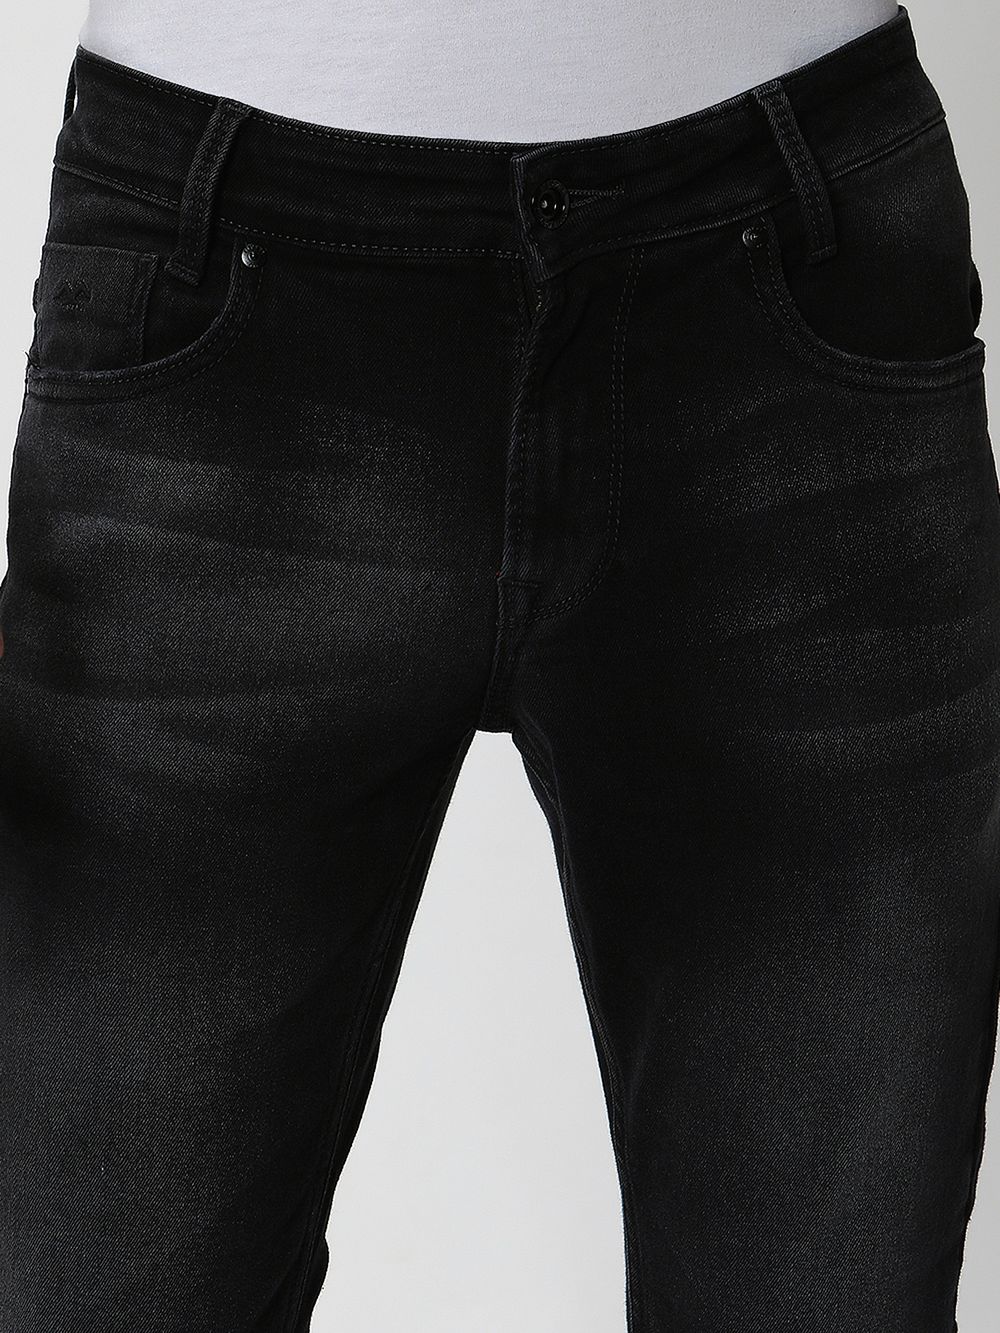 Black Skinny Fit Originals Stretch Jeans